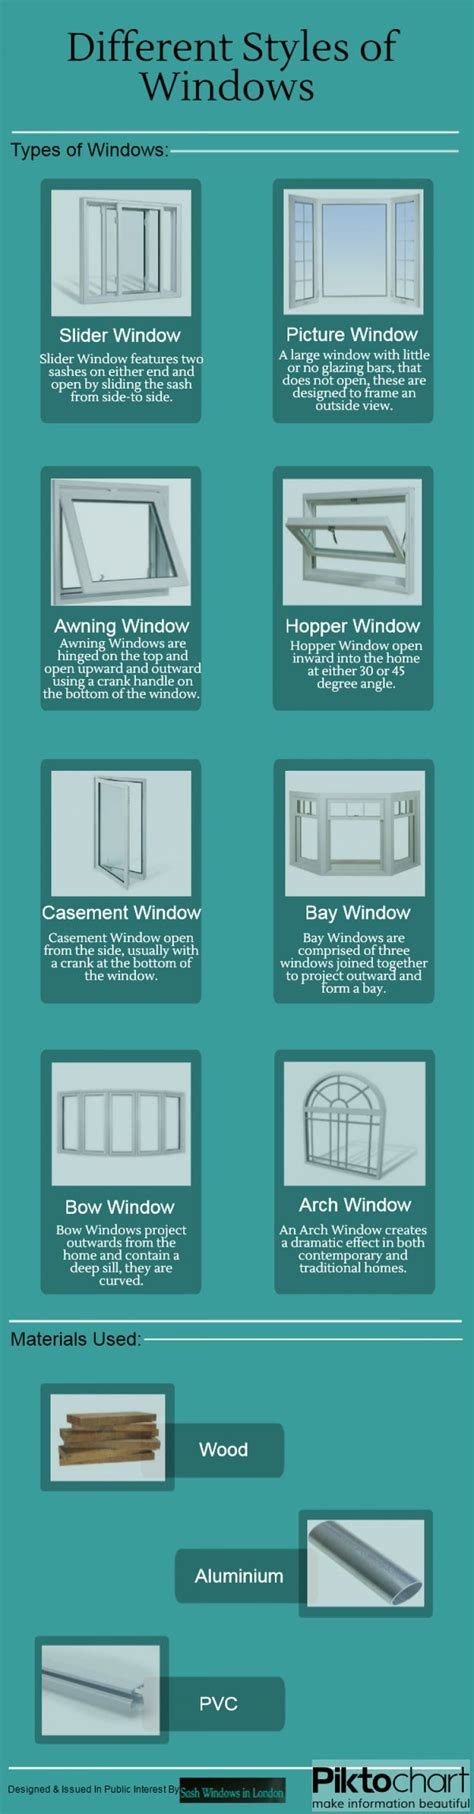 Diffrent Styles of Windows | Interior design guide, Window styles, Interior design tips